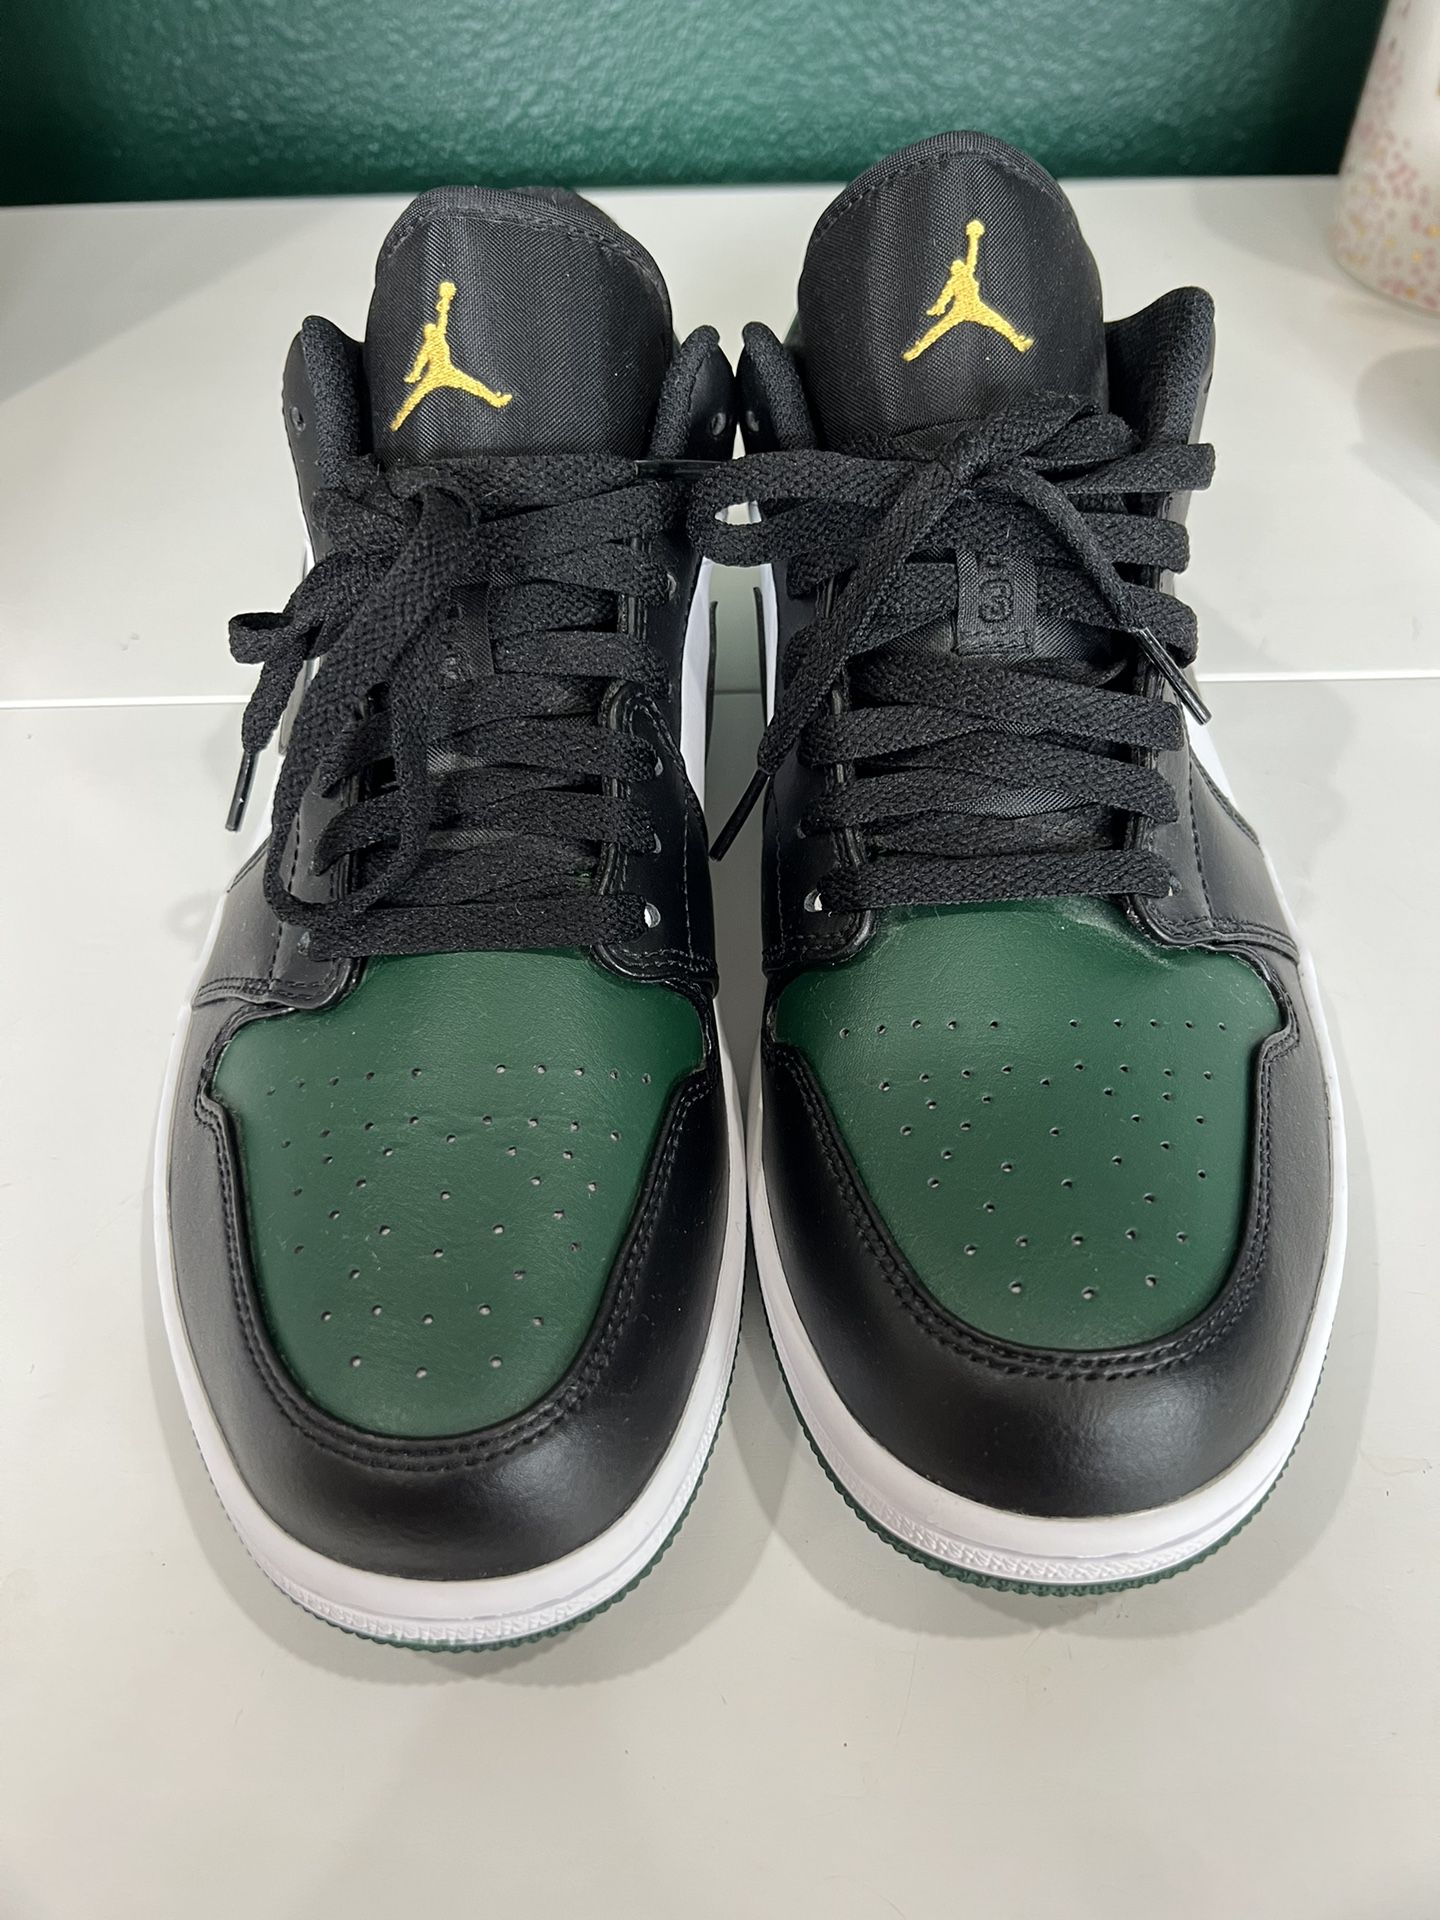 Air Jordan 1 Low “Green Toe” Noble Green/Black/Gold